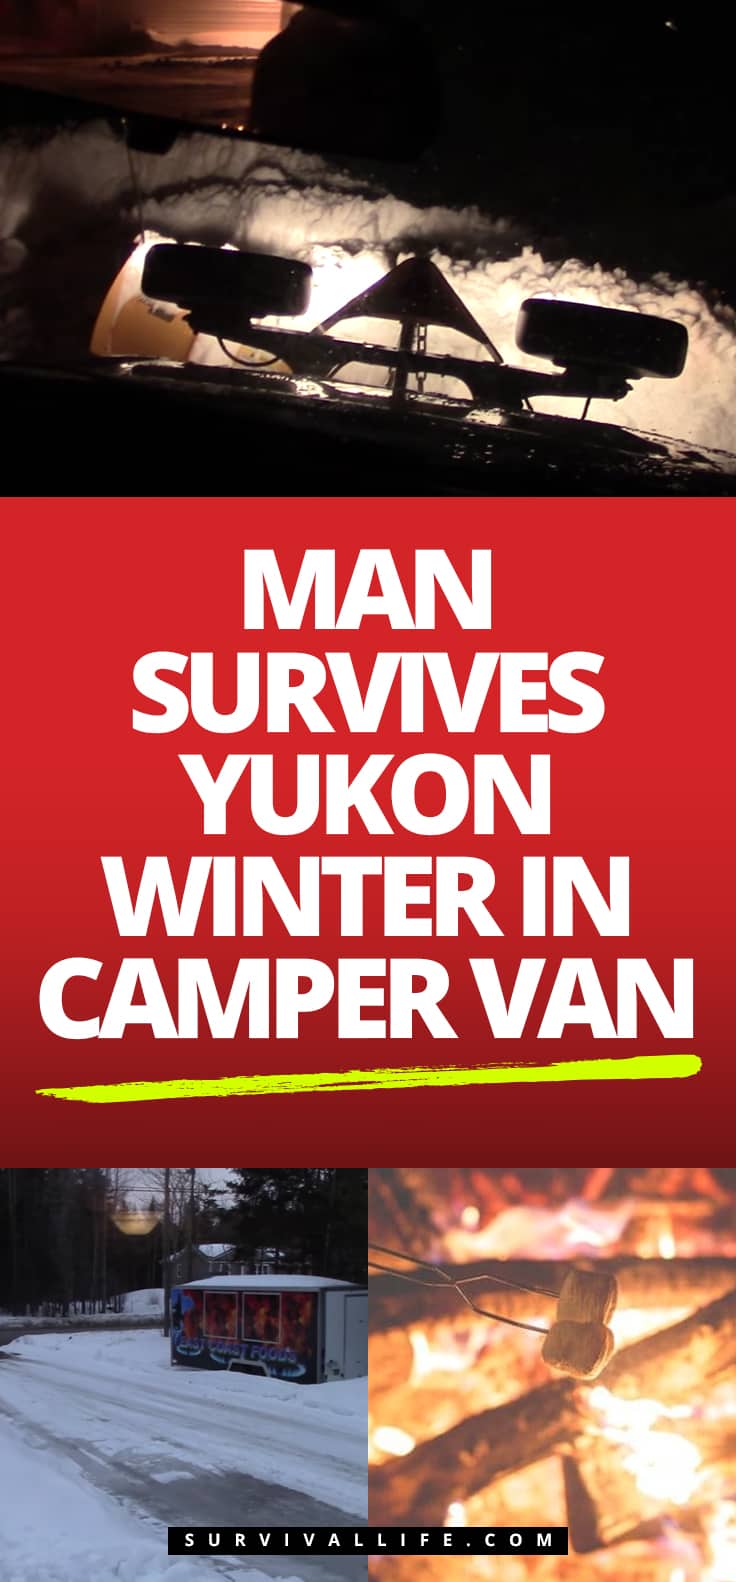 Man Survives Yukon Winter in Camper Van